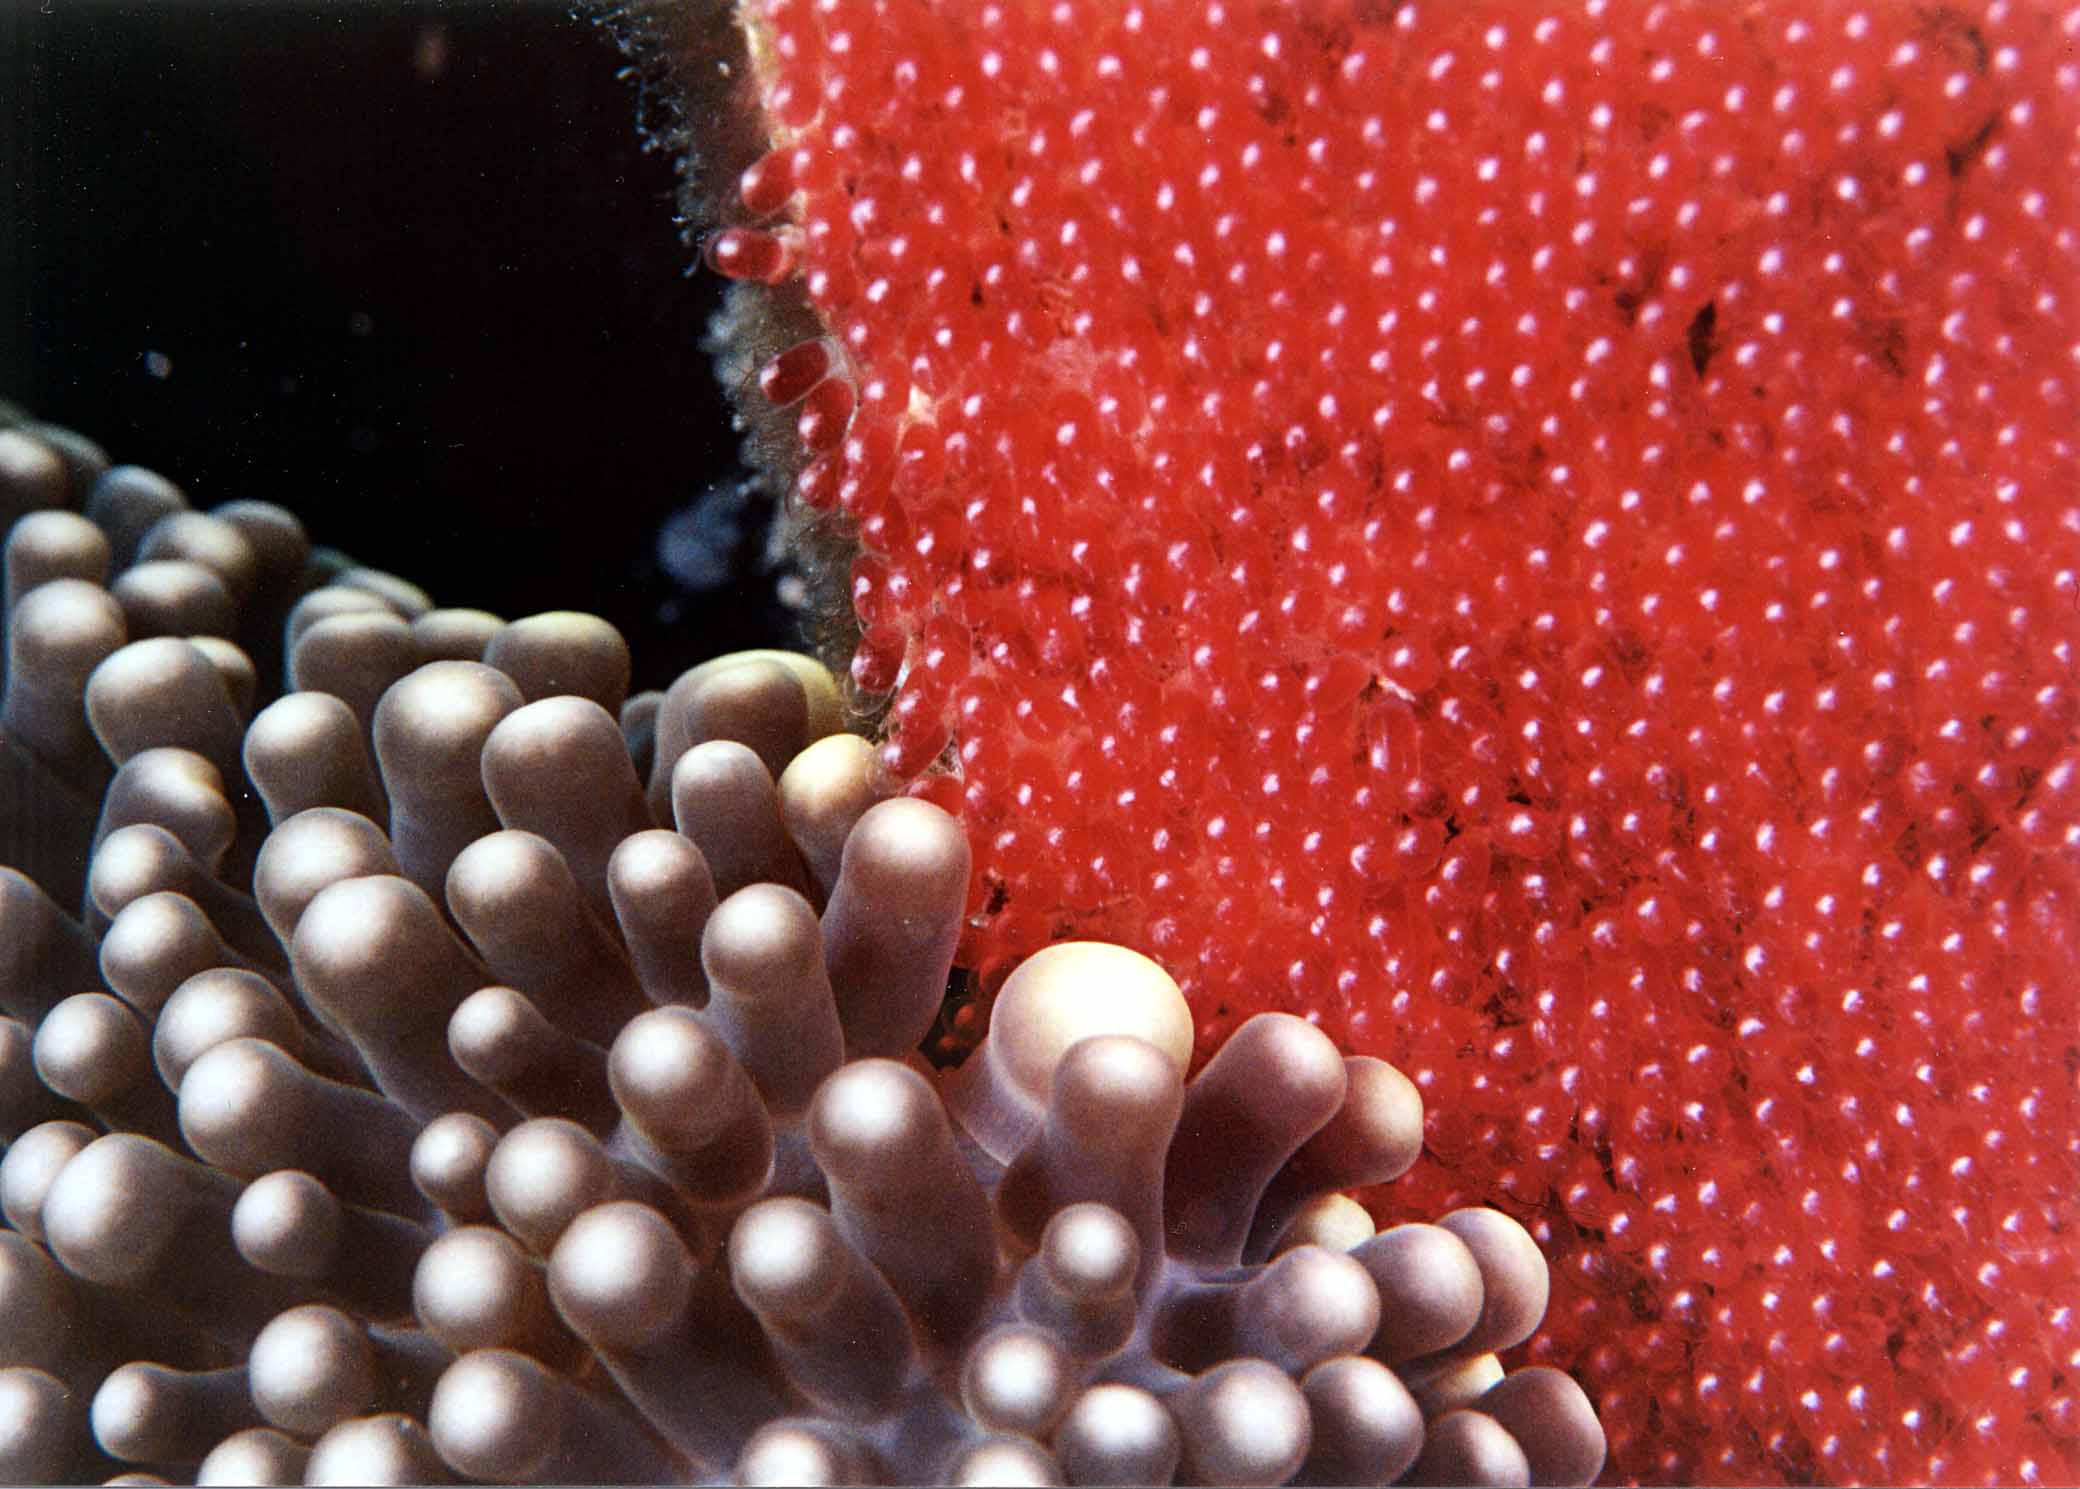 Dusky anemone fish eggs